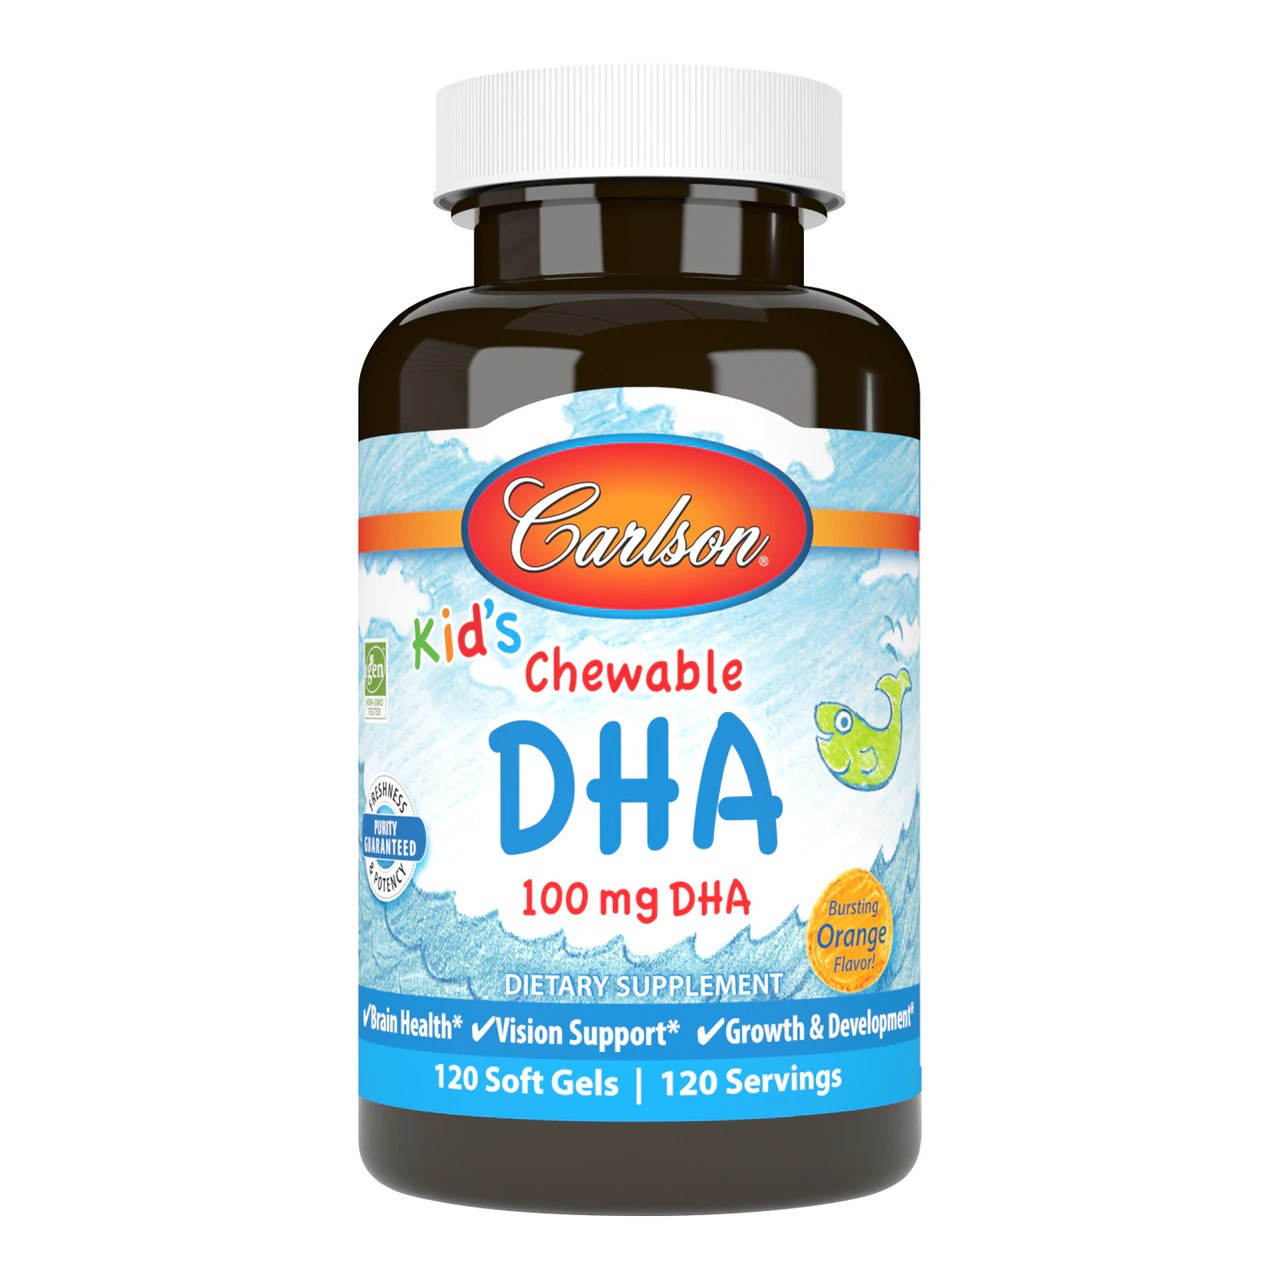 Carlson Kid's Chewable DHA жувальні Omega-3 для дітей смак апельсин, 120 ЖК